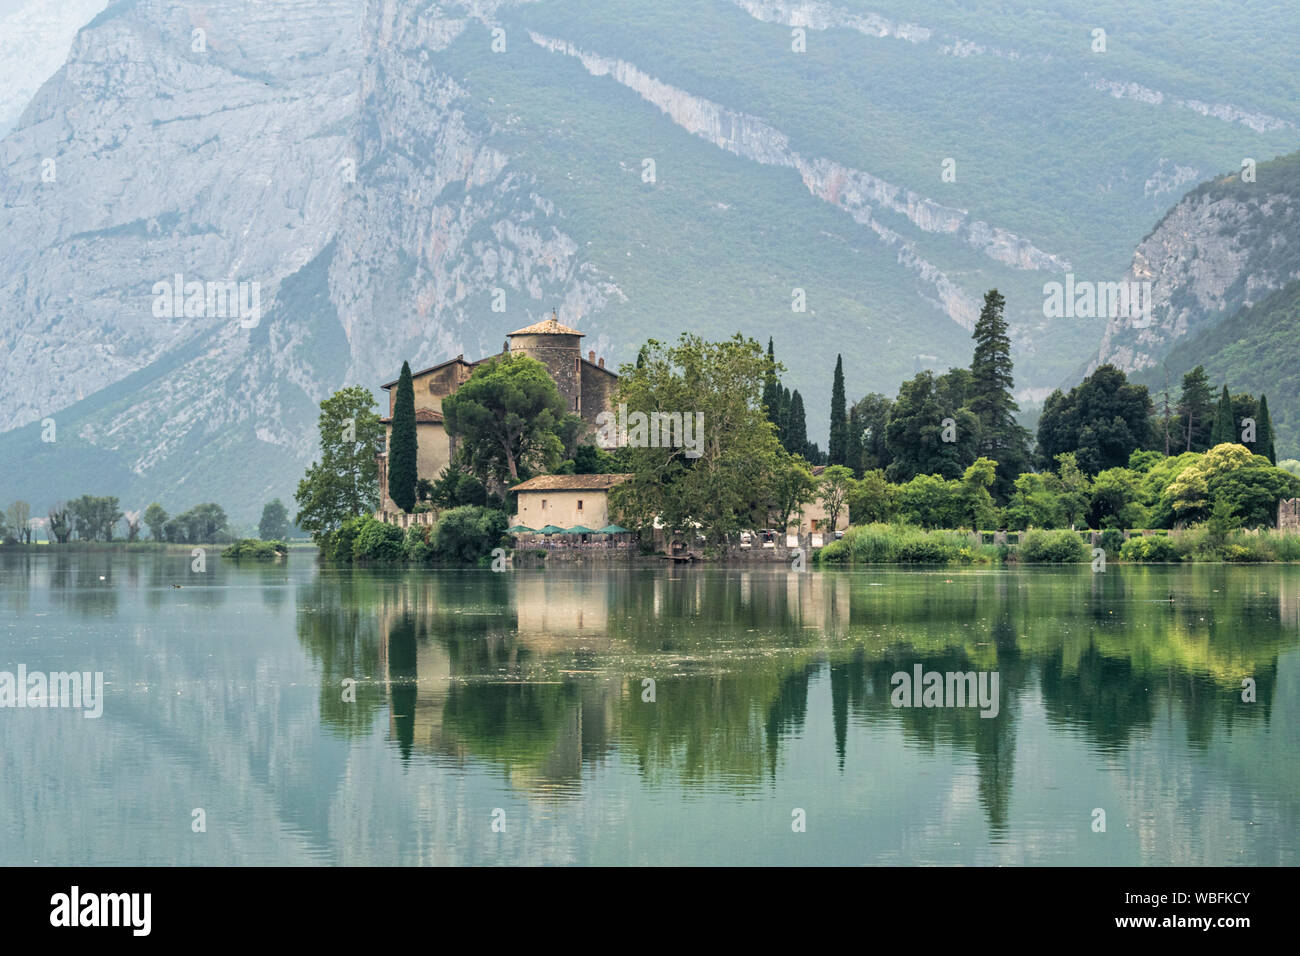 Castle Toblino, Italy - July 25, 2019 : The reflections of Tobilino Castle in the Trento Region of Italy Stock Photo